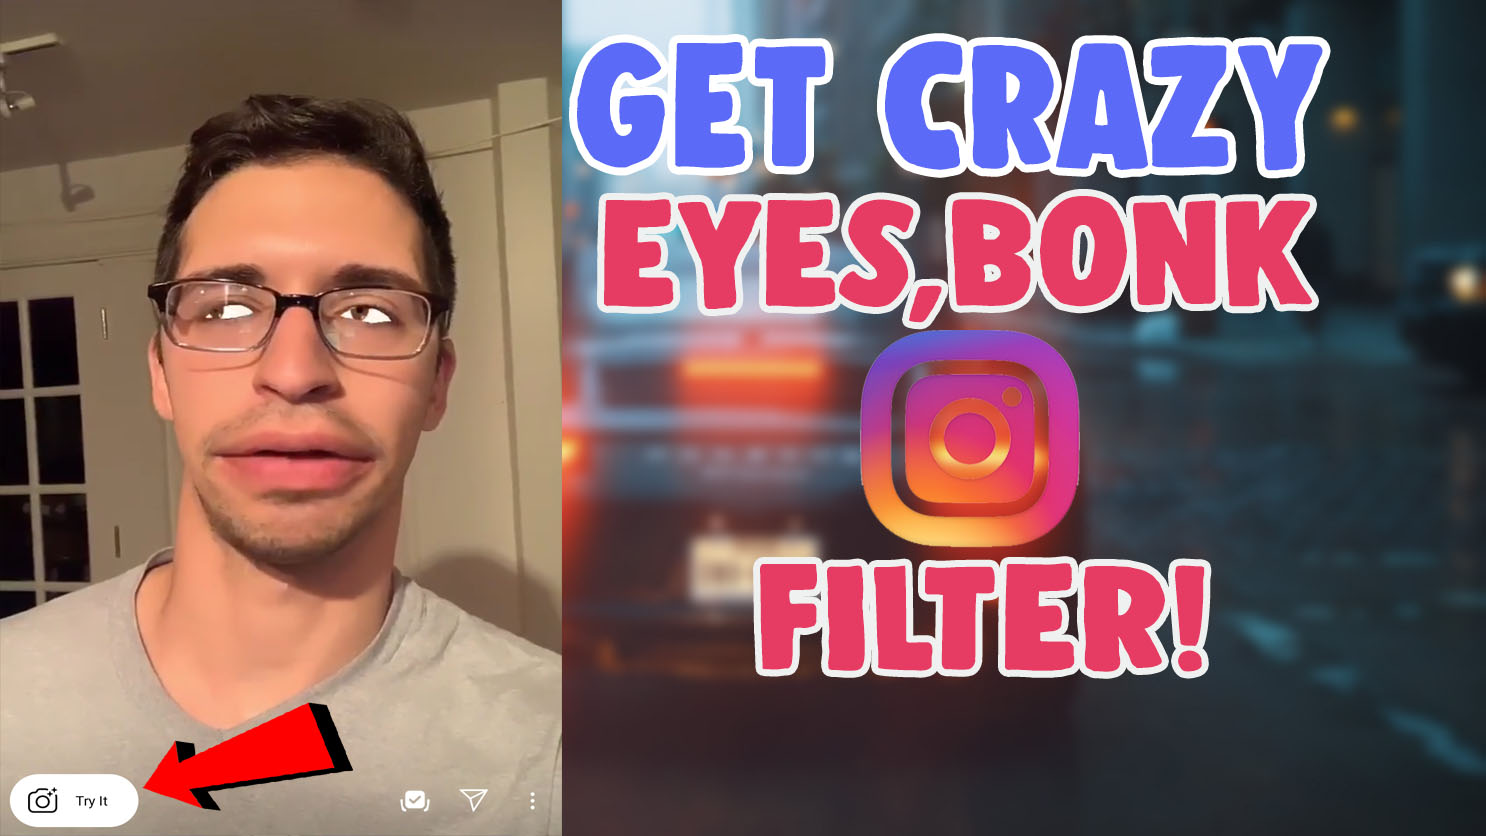 How To Get Crazy Eyes and Bonk Filter On Instagram - SALU NETWORK.